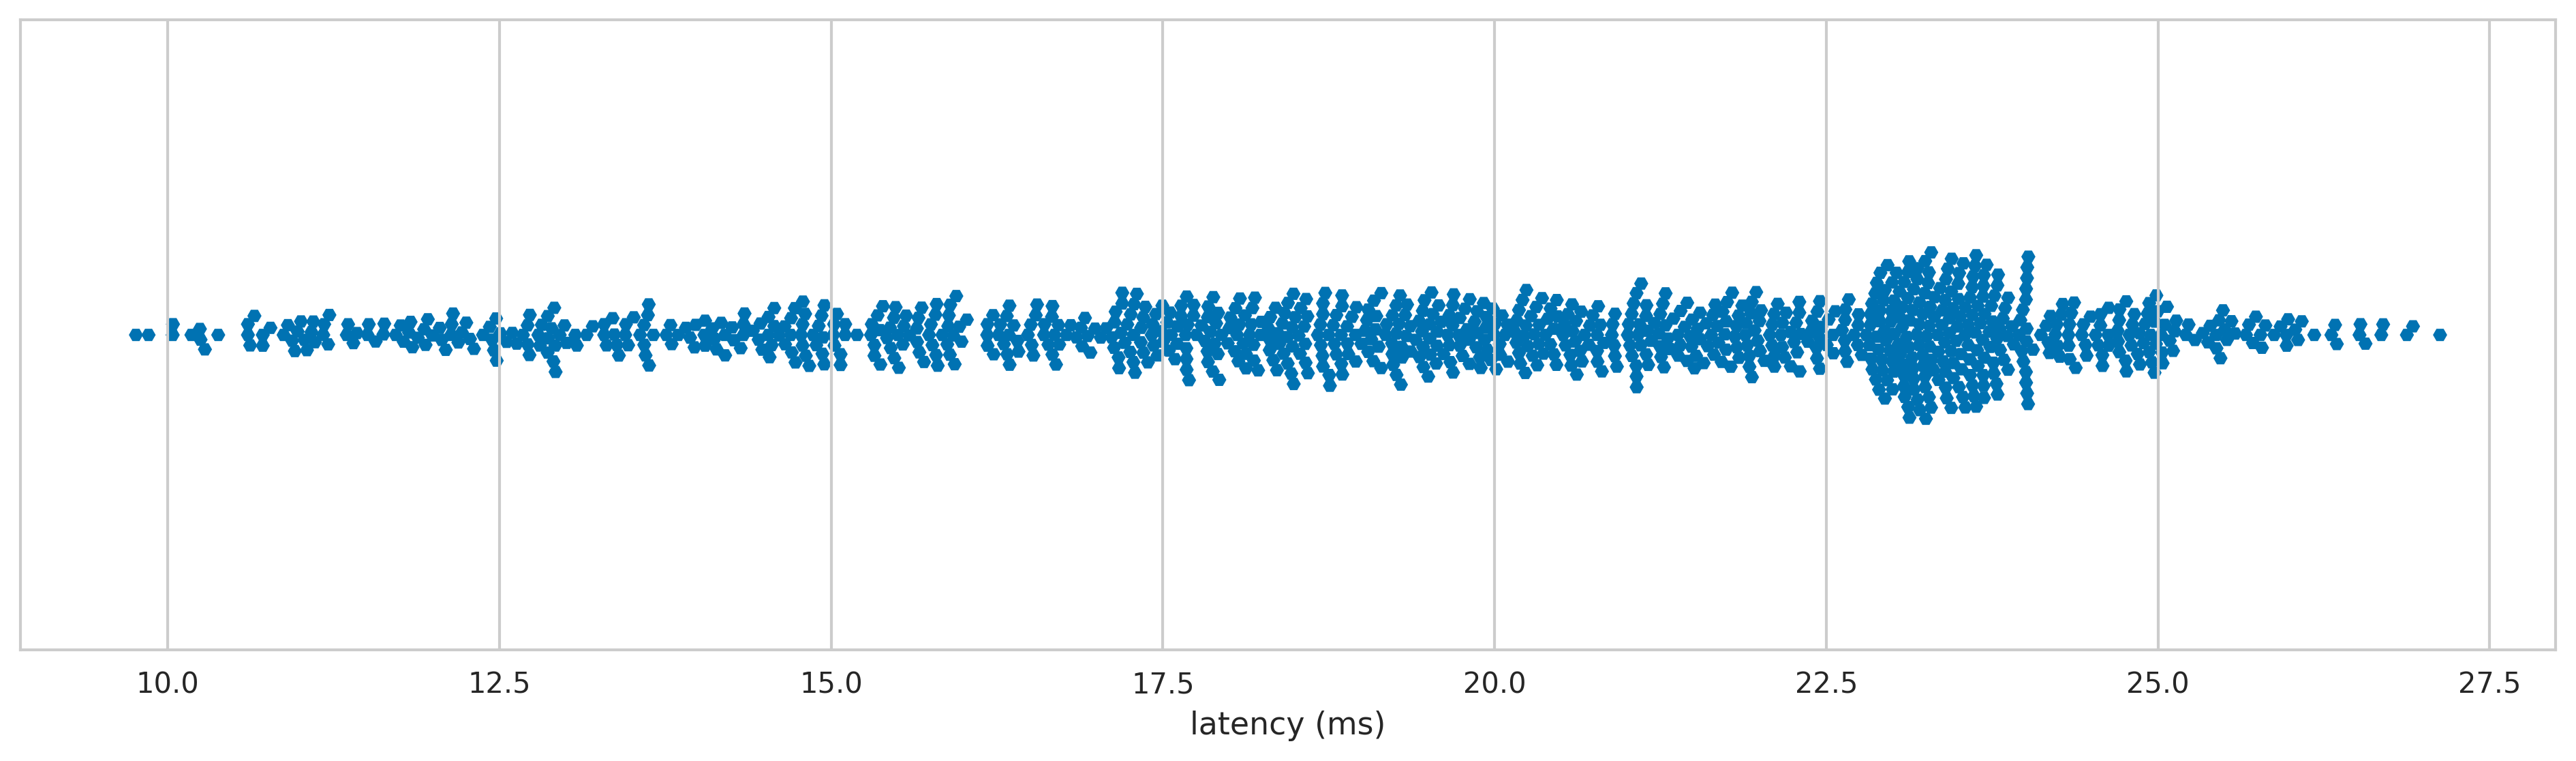 Tramani CT-P3000 latency distribution 